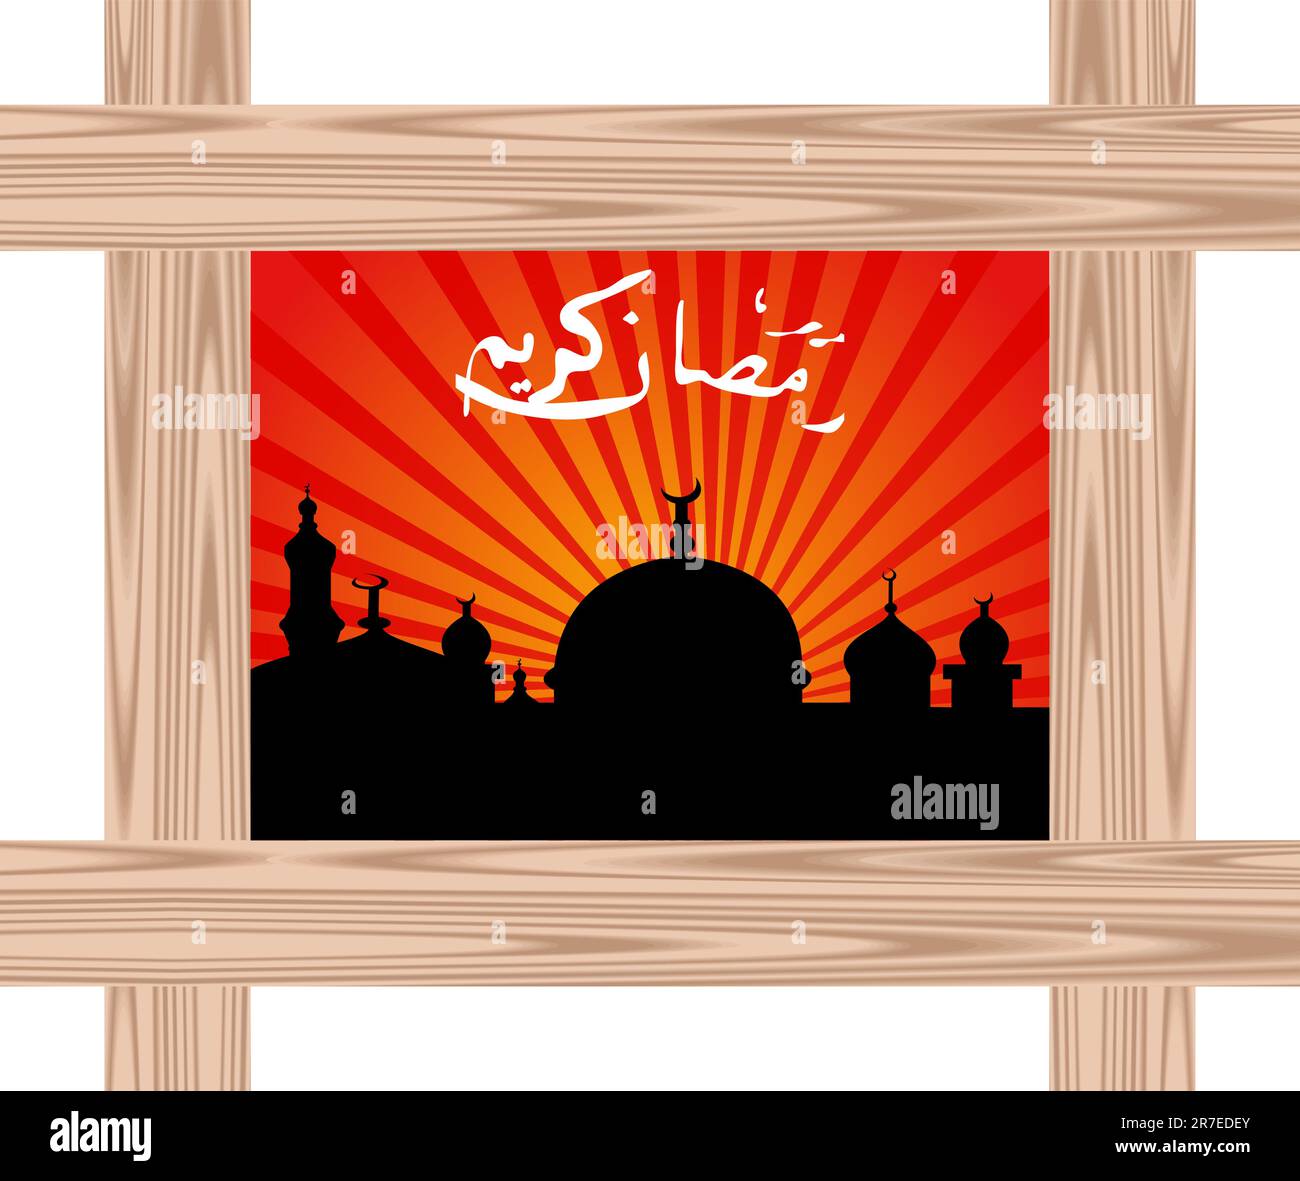 Illustration ramazan celebration background with wooden frame - vector Stock Vector